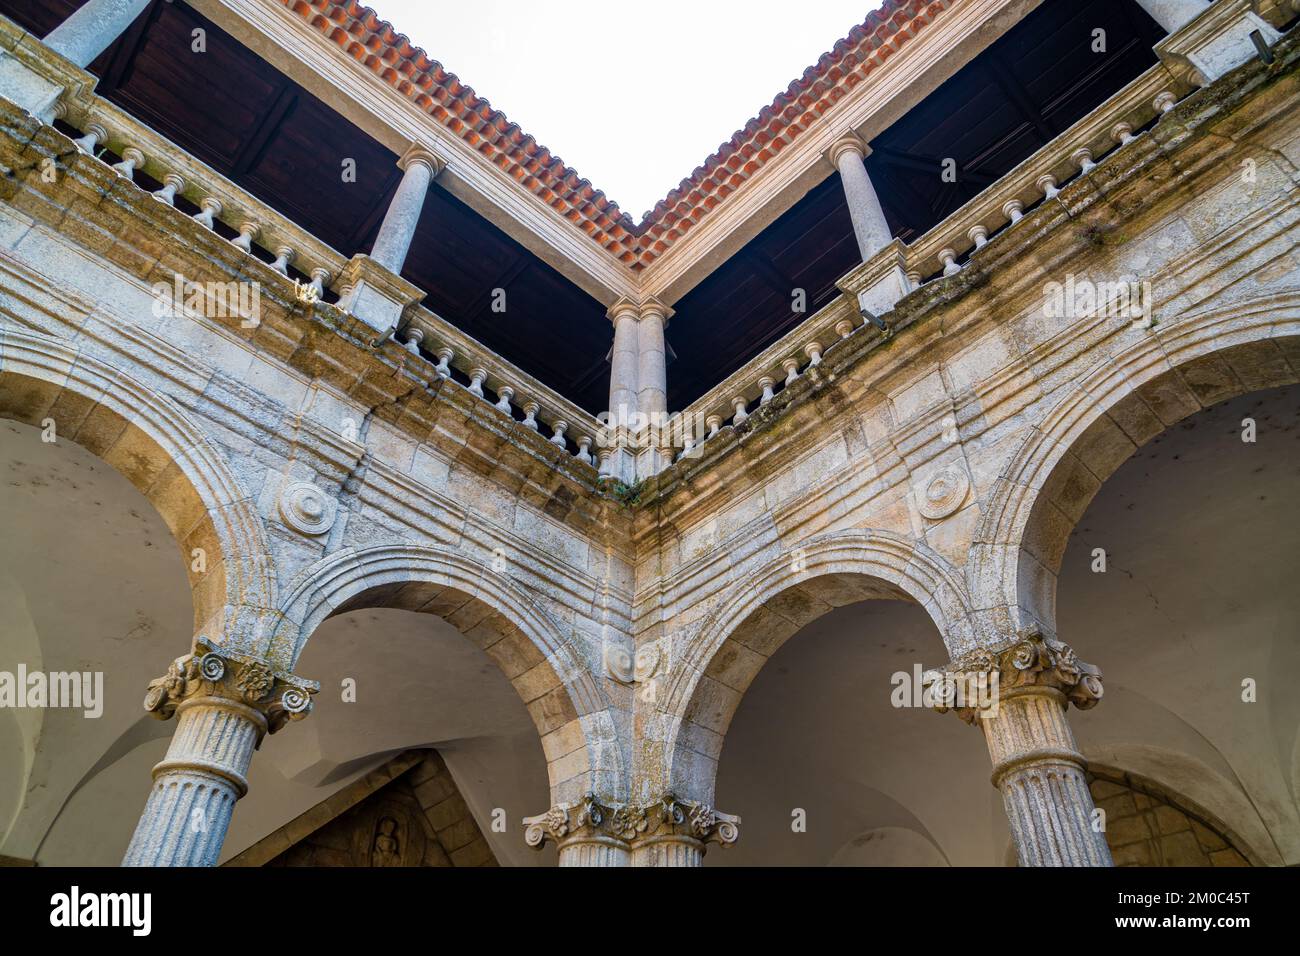 Ornate medieval arches and roof of the Cathedral of Santa María de la Asunción in Viseu, Portugal Stock Photo